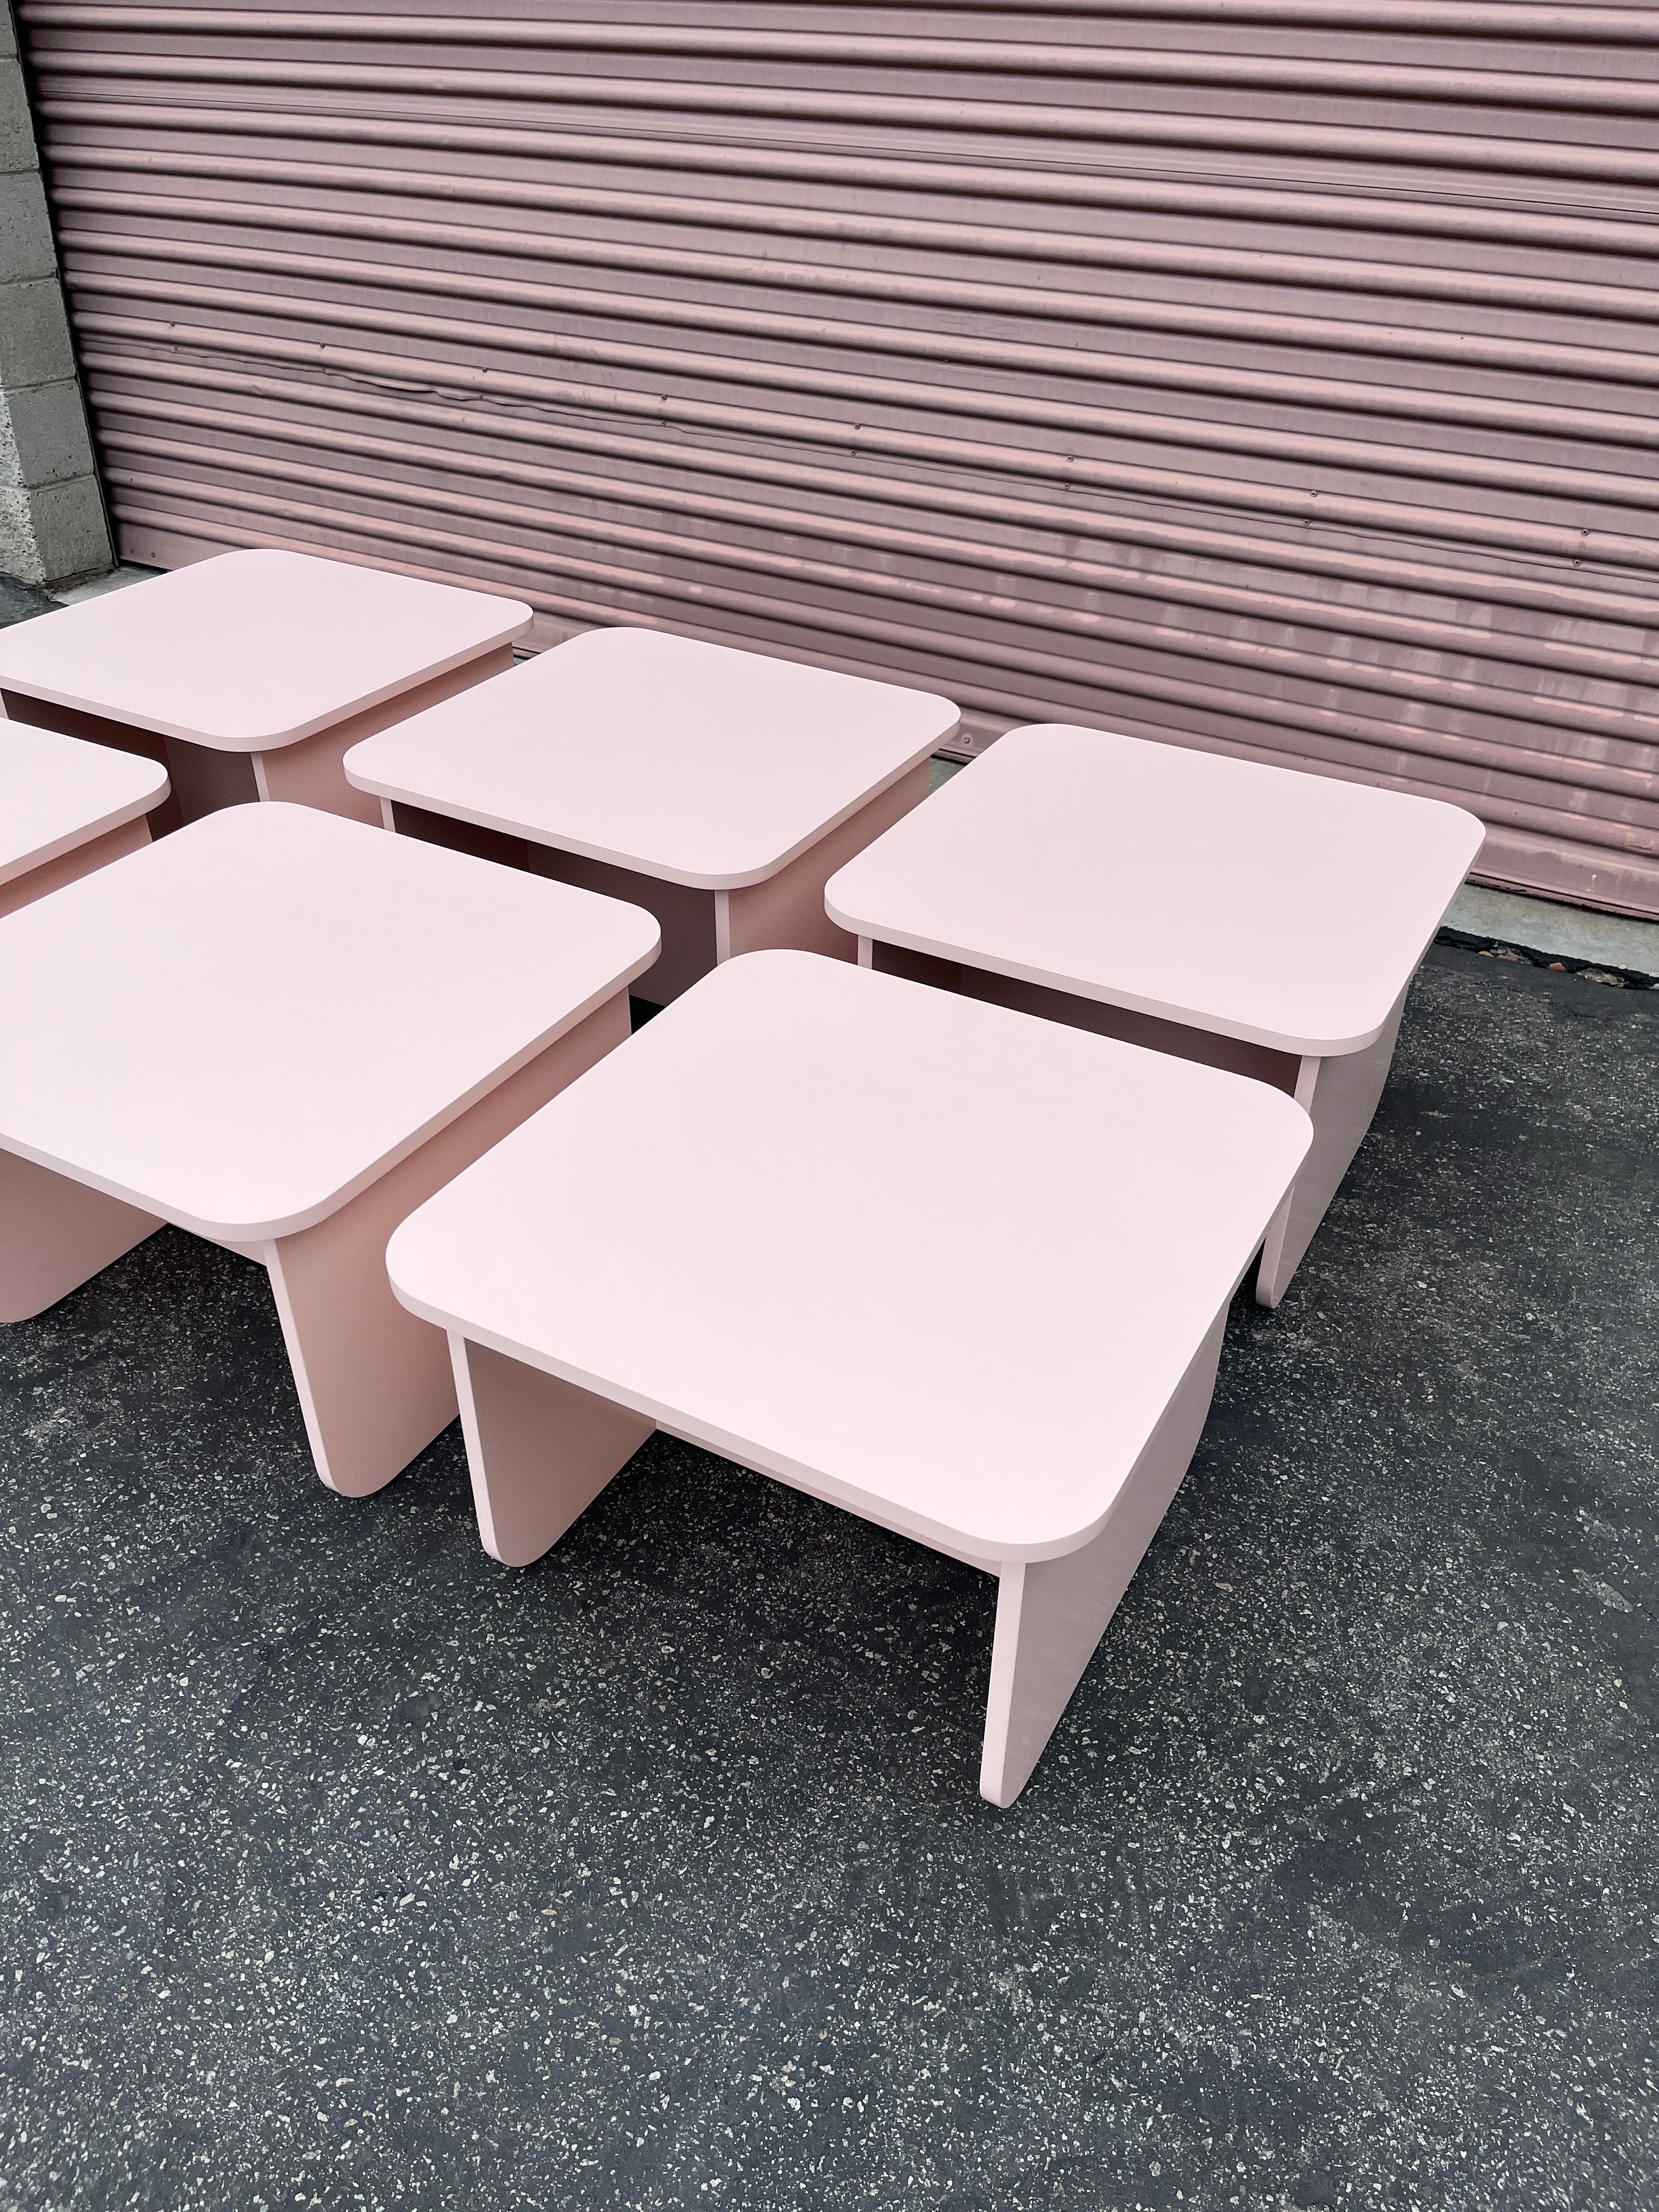  Square Side Tables - Buck LA product image 7